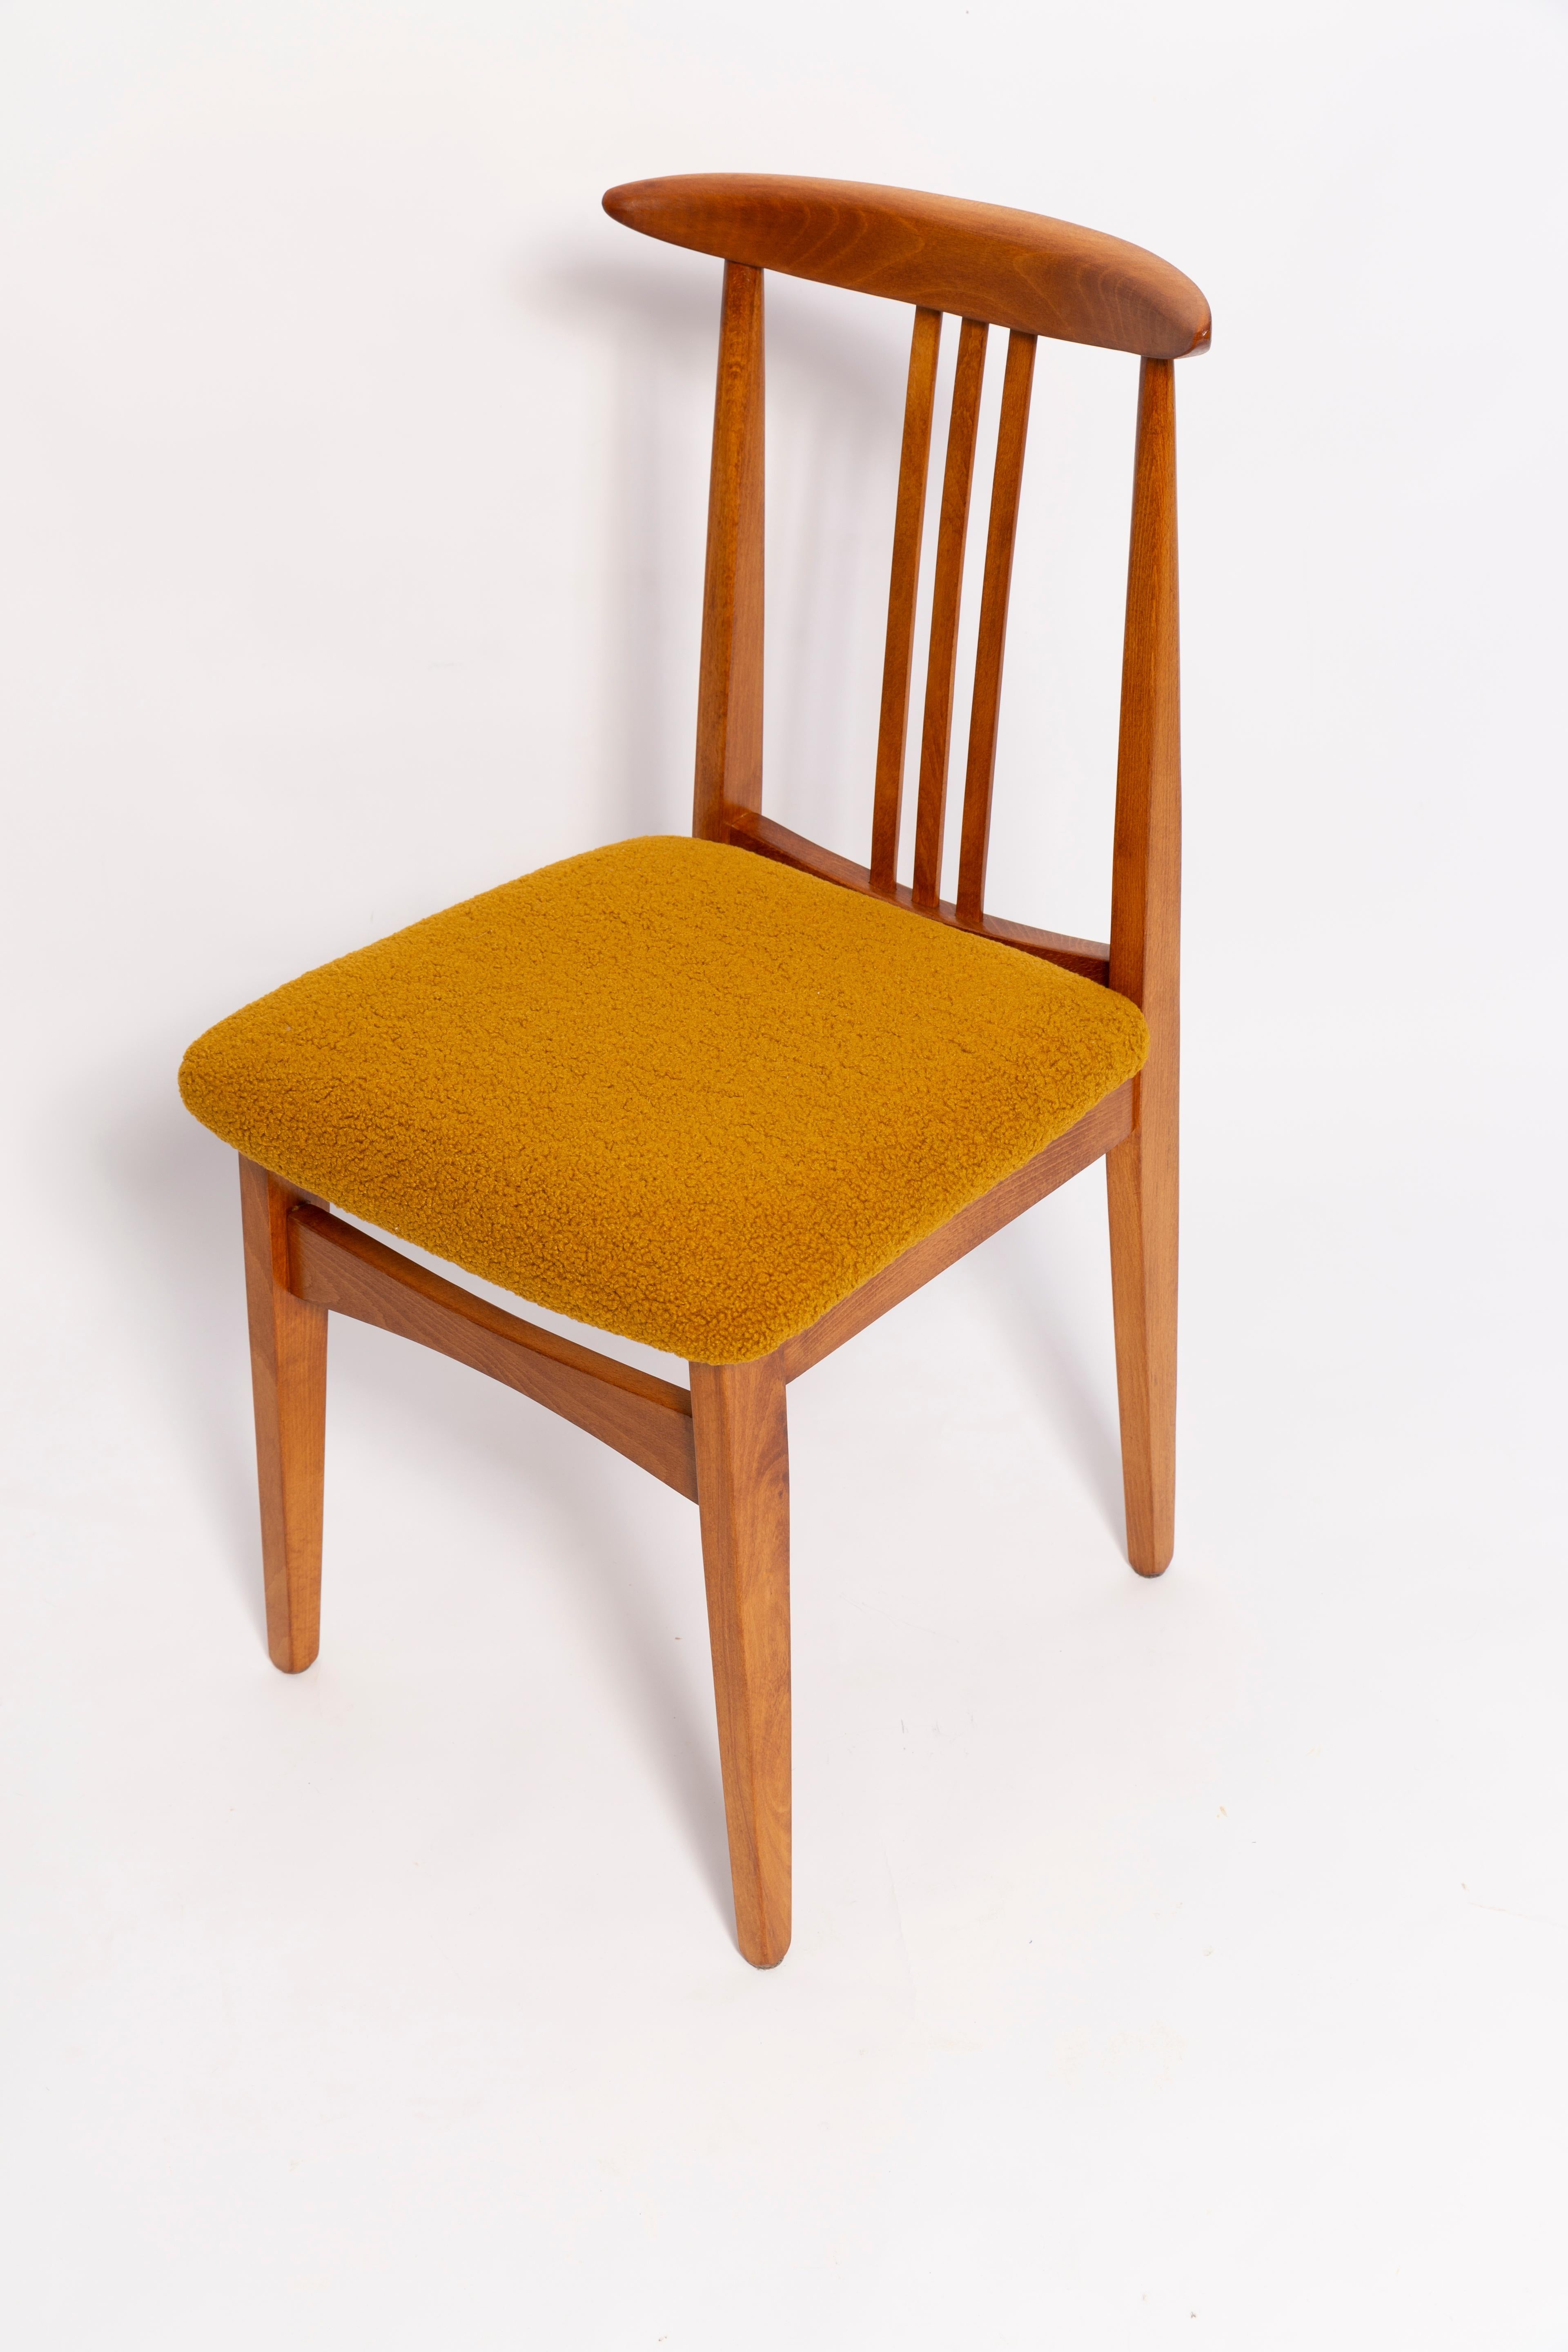 Bouclé Ten Mid-Century Ochre Boucle Chairs, Medium Wood, M. Zielinski, Europe, 1960s For Sale